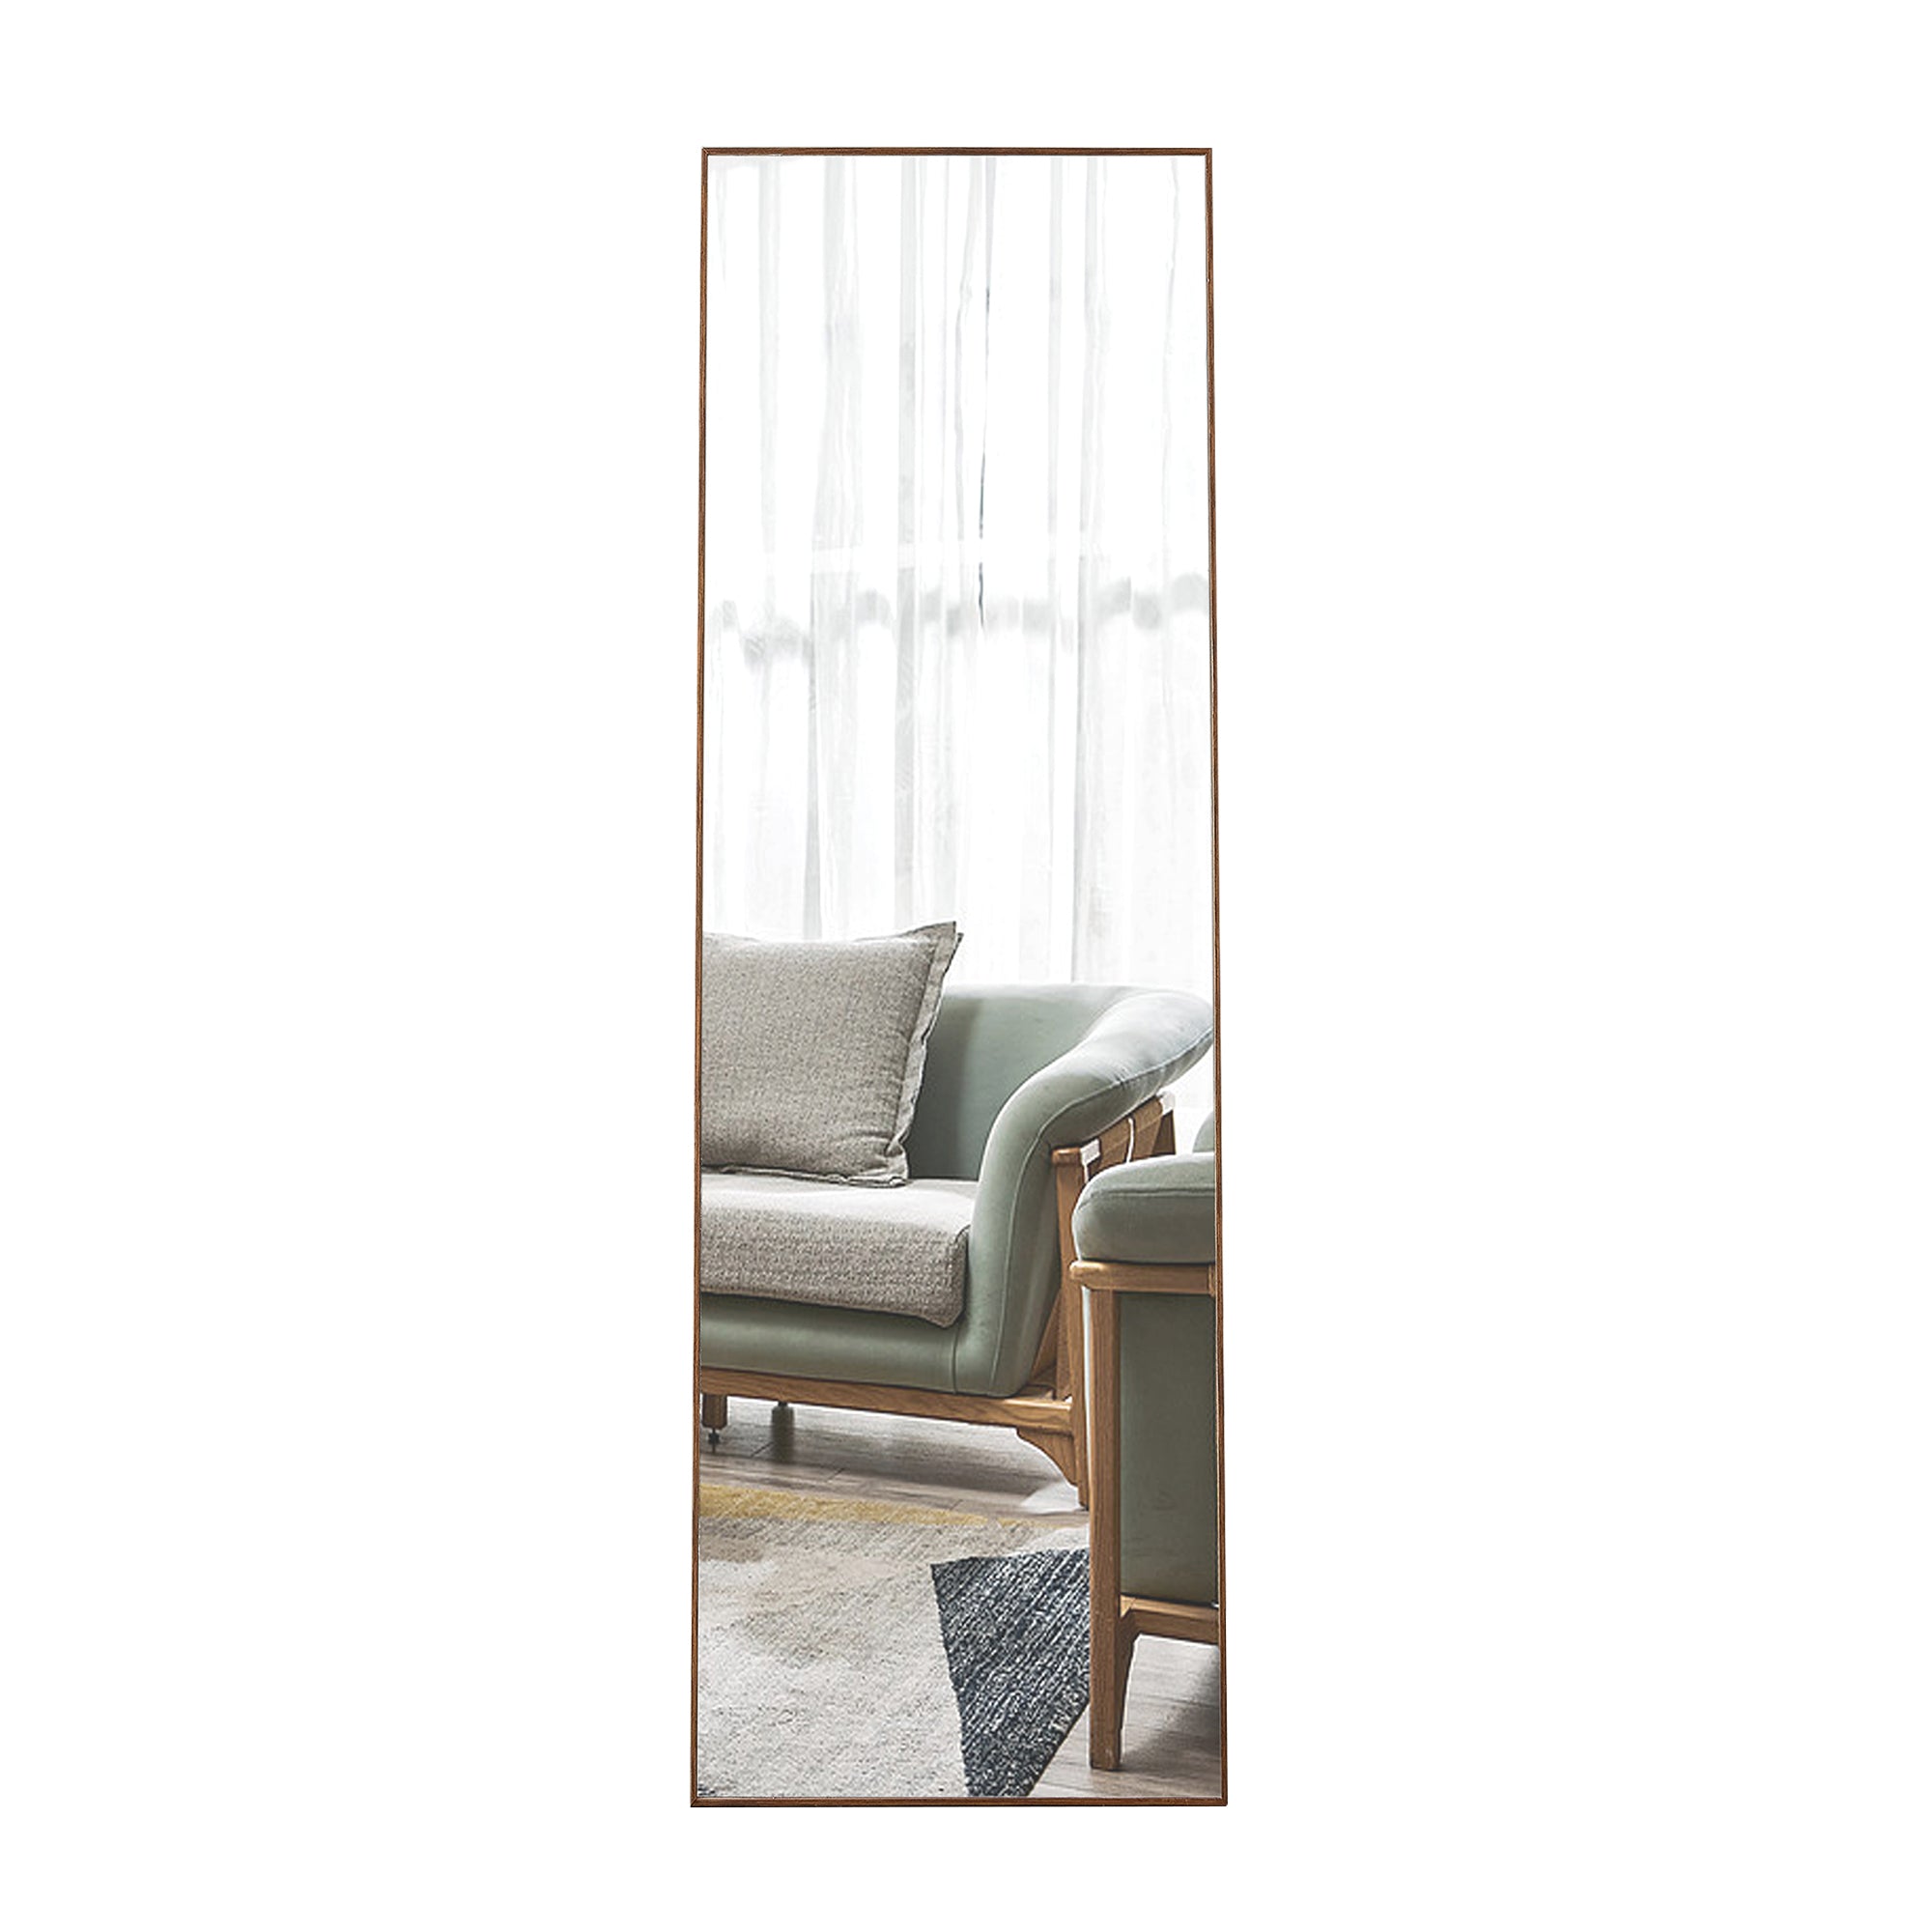 60" X 17" Brown Wood Frame Standing Floor or Wall Mirror